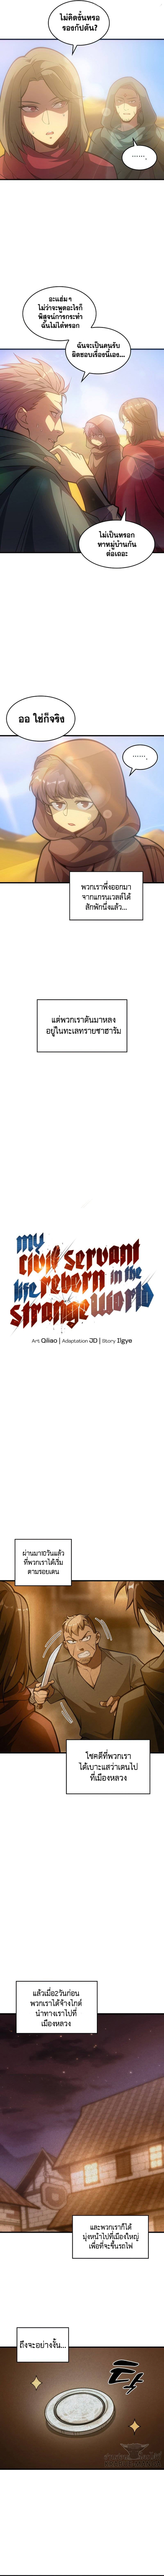 My Civil Servant Life Reborn in the Strange World 30 (3)